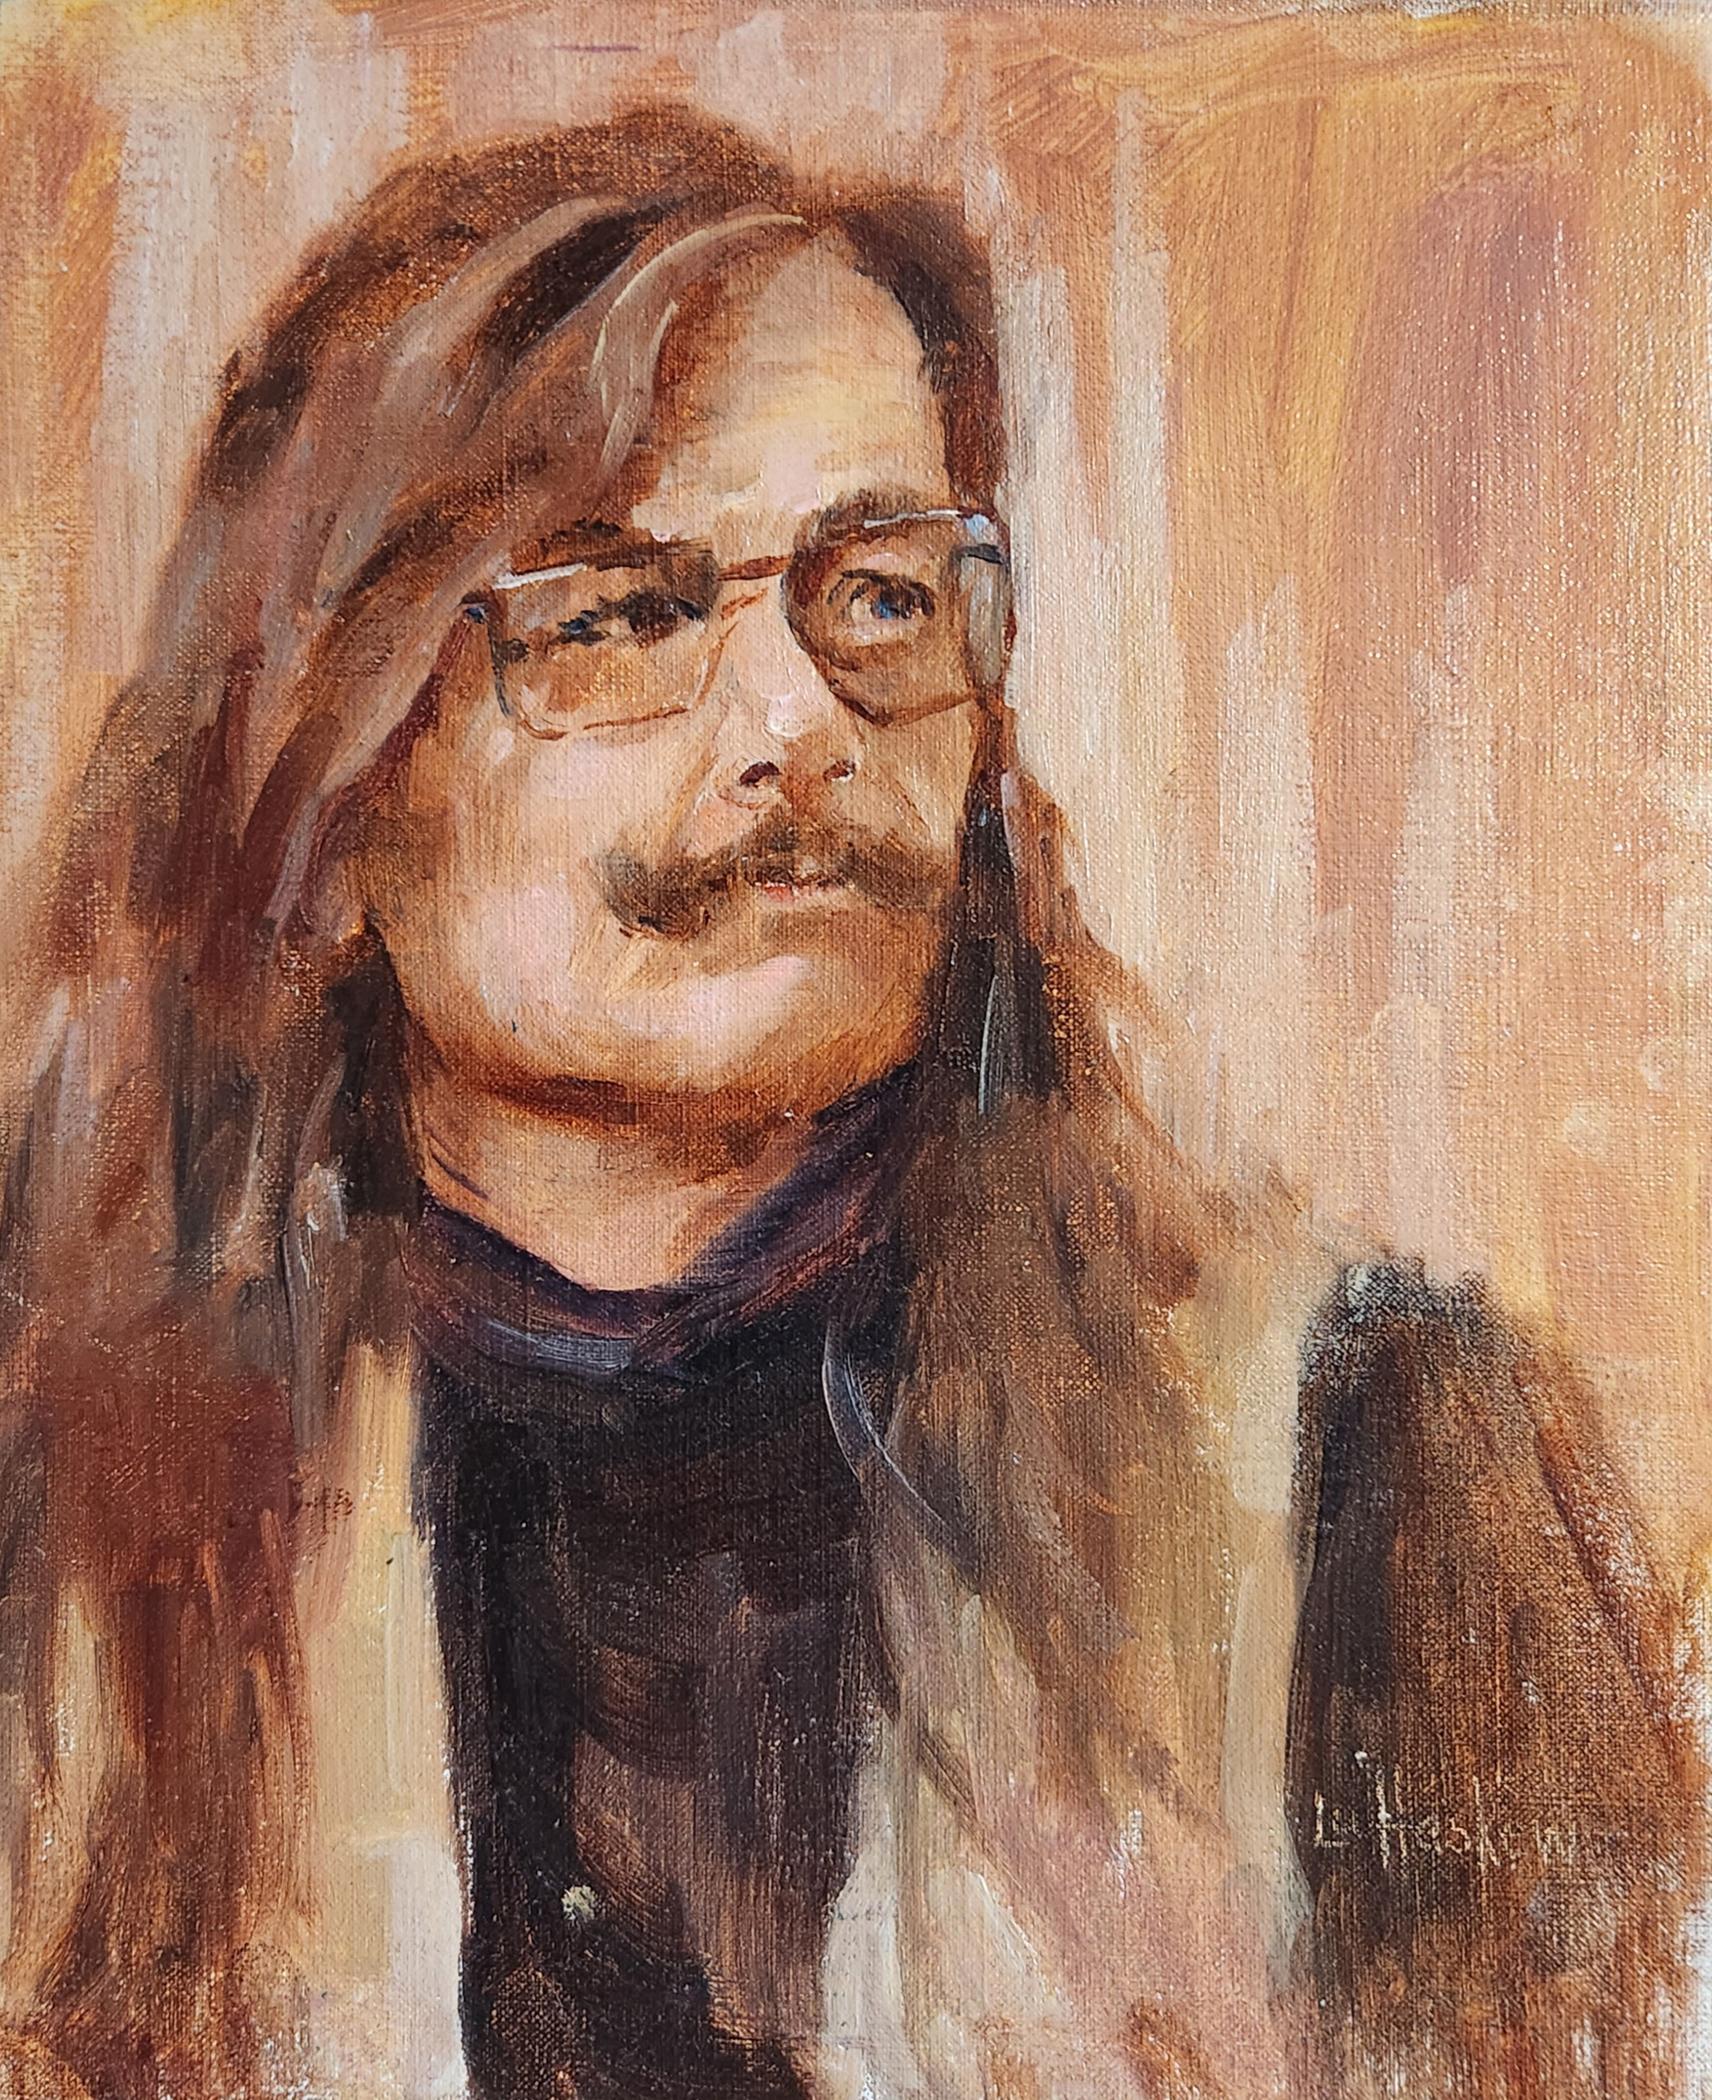 Figurative Painting Lu Haskew - The Mustache, 10x8" huile sur carton